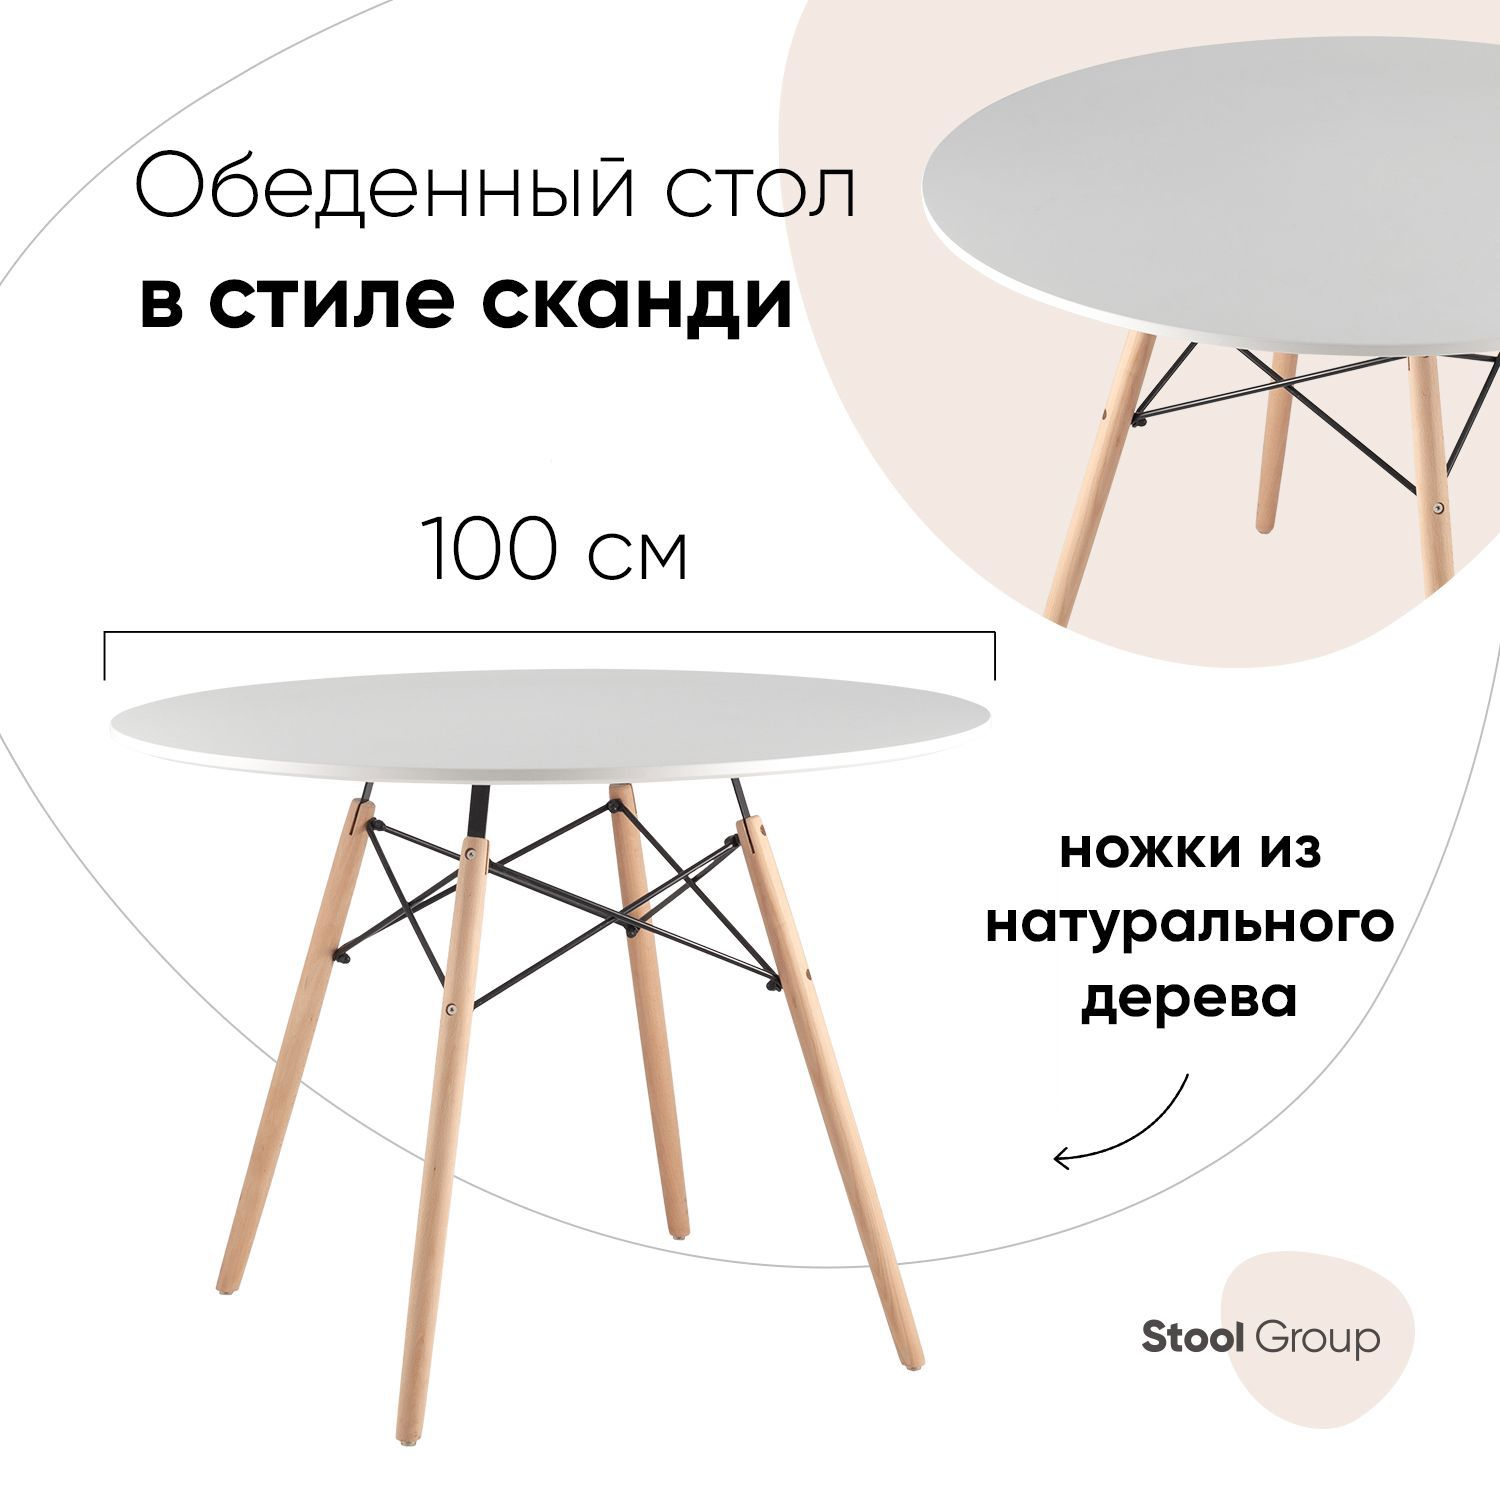 90403221 Кухонный стол круг 100x70 см МДФ цвет белый DSW STLM-0215922 СТУЛ ГРУП